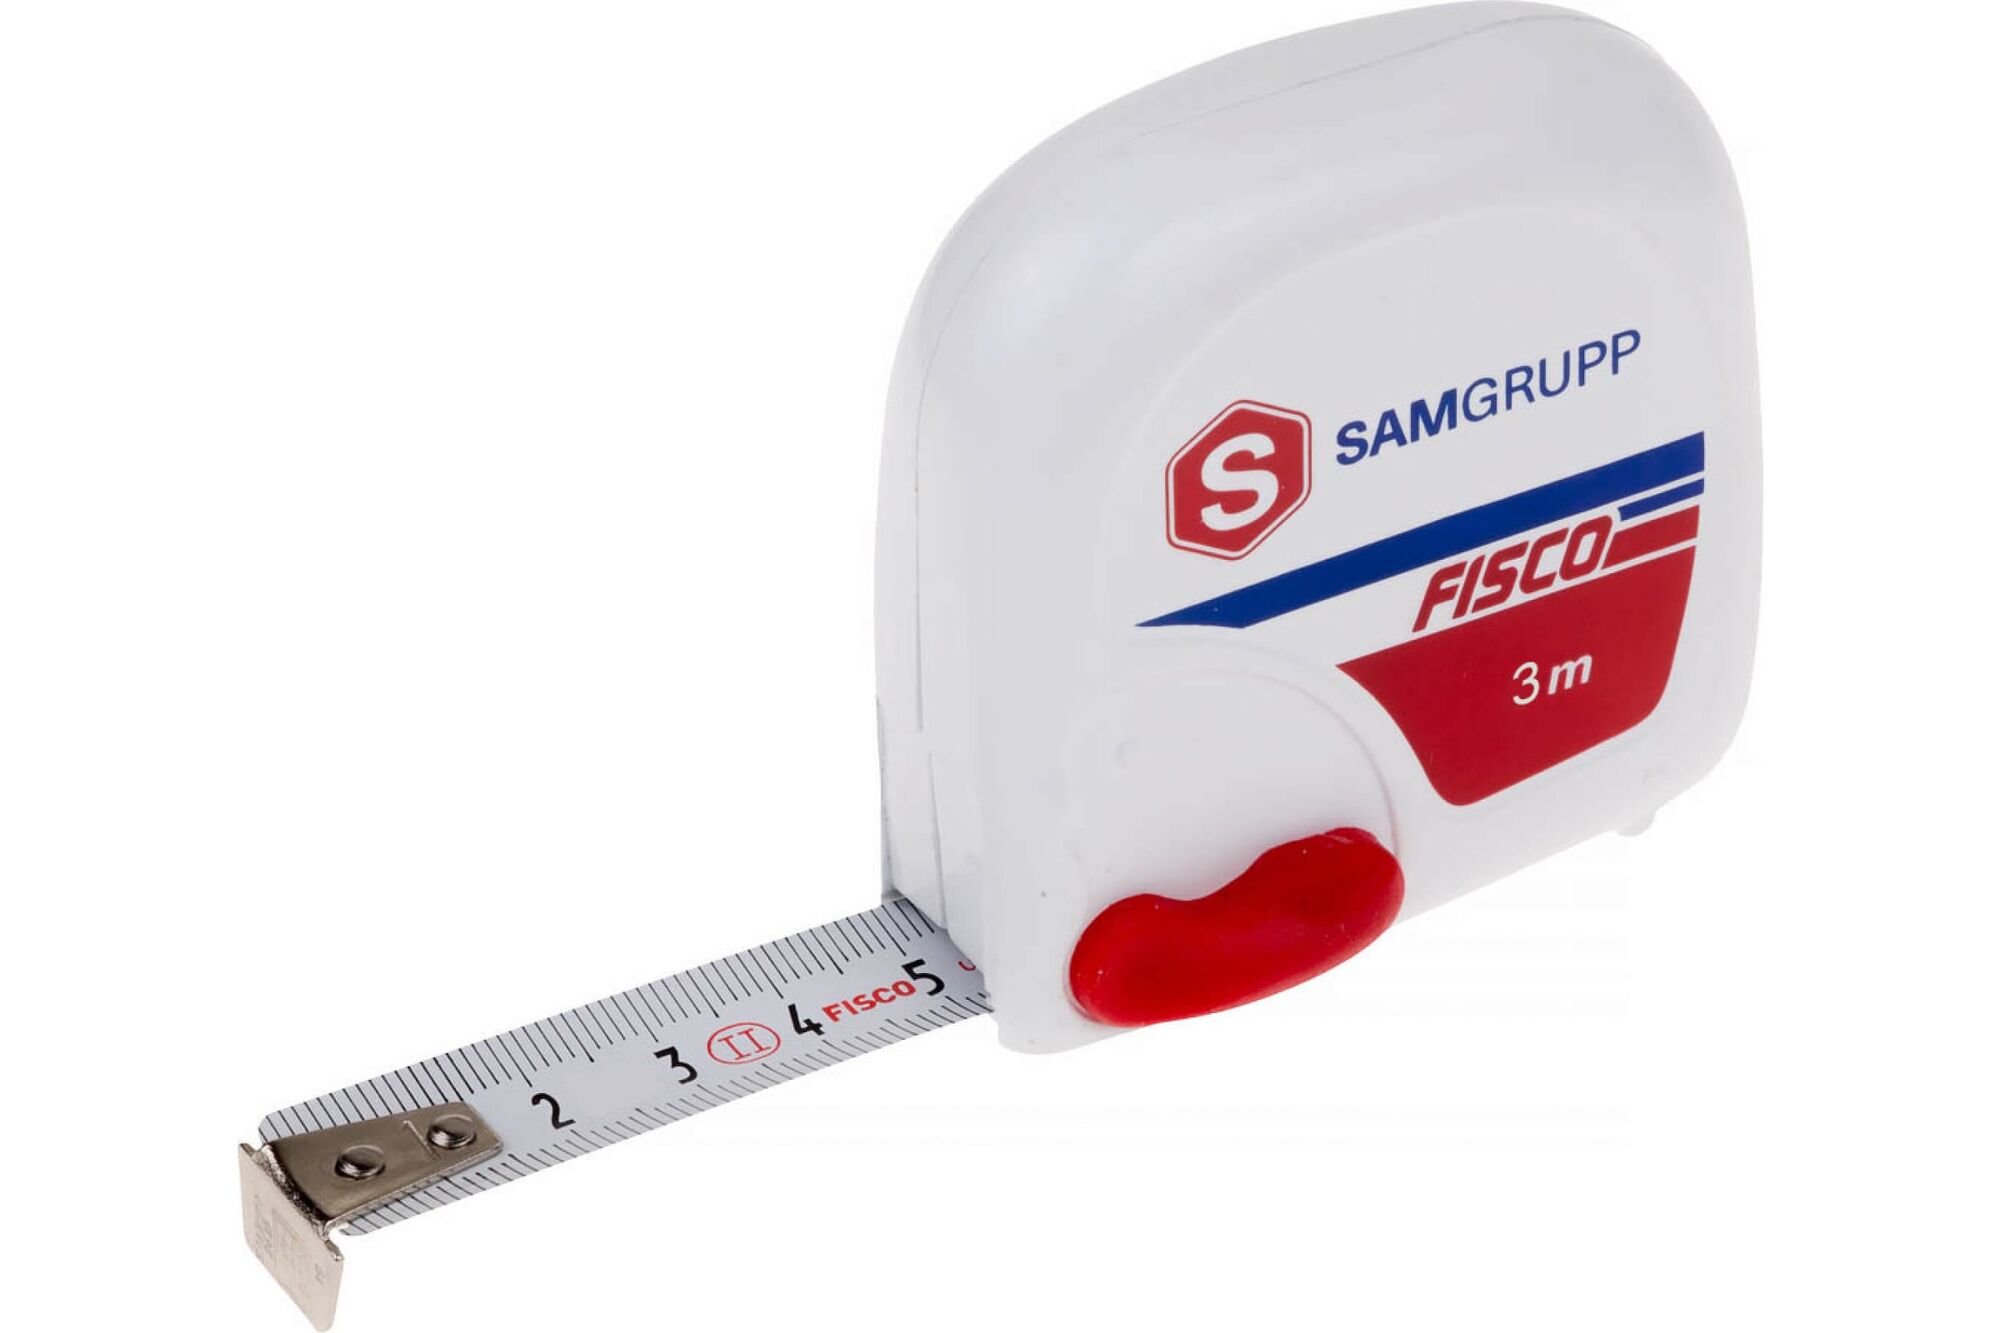 Рулетка SAMGRUPP Fisco 3 м 16084